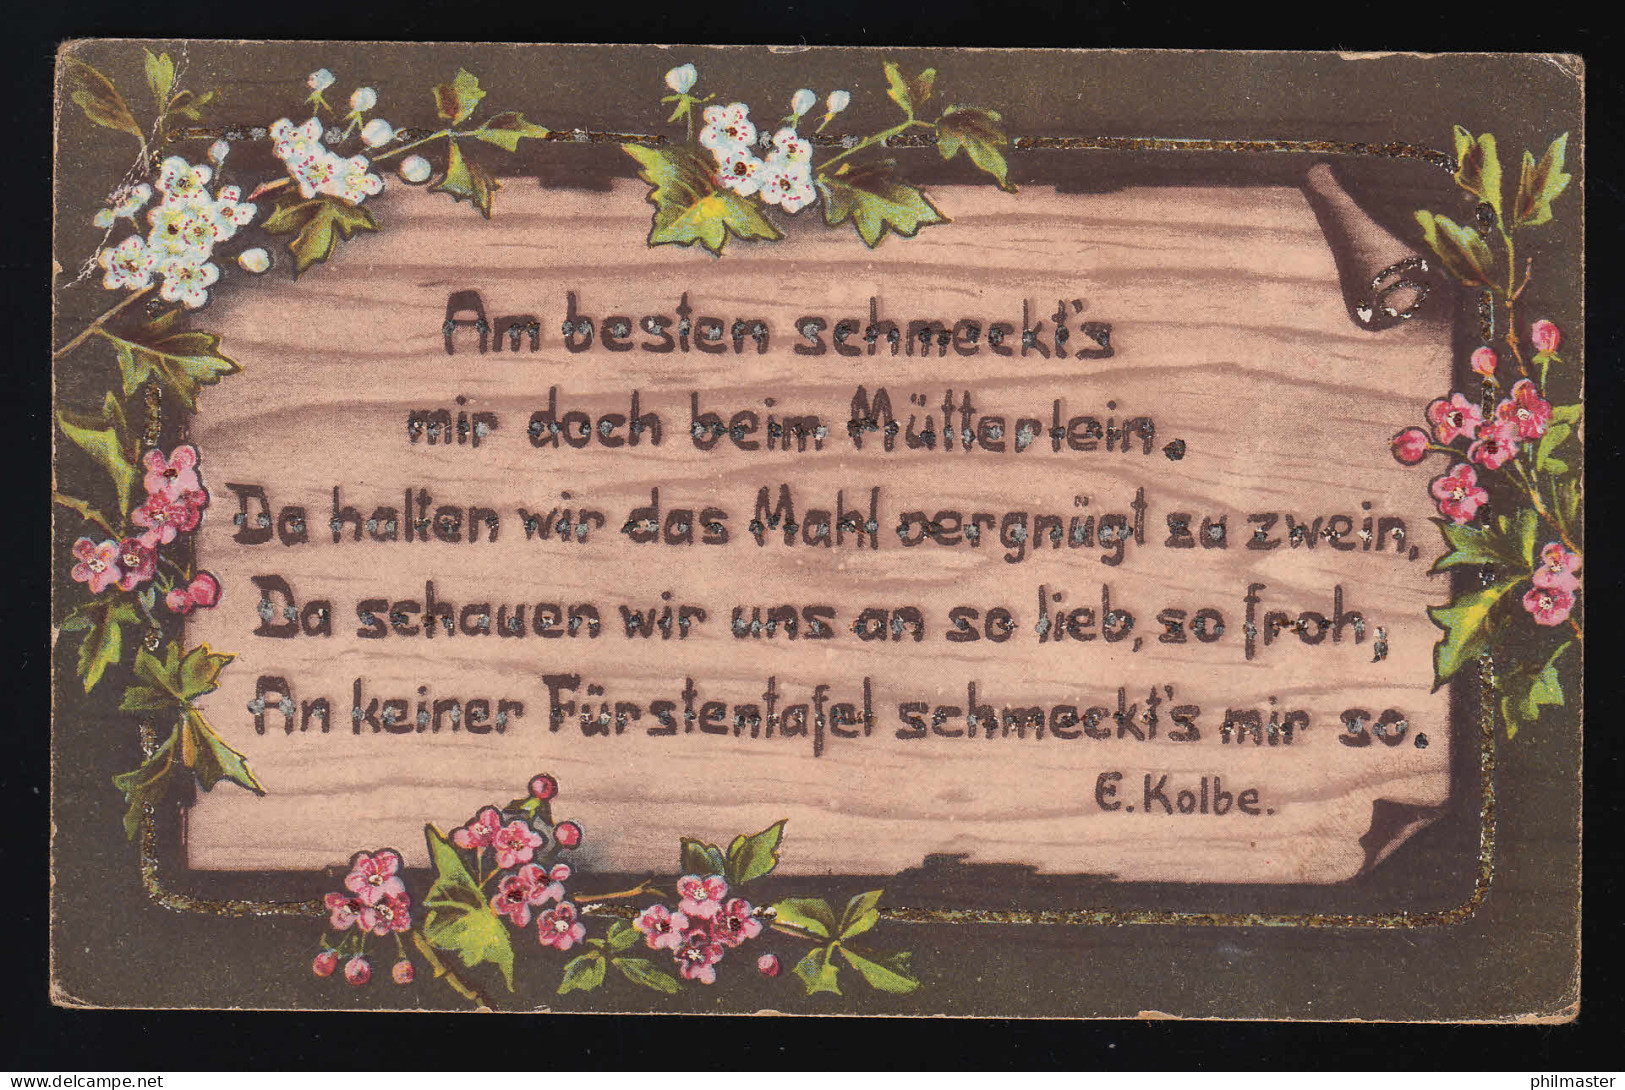 Am Besten Schmeckt's Mir Doch Beim Mütterlein, Text E.Kolbe Blumen, Ungebraucht - Muttertag